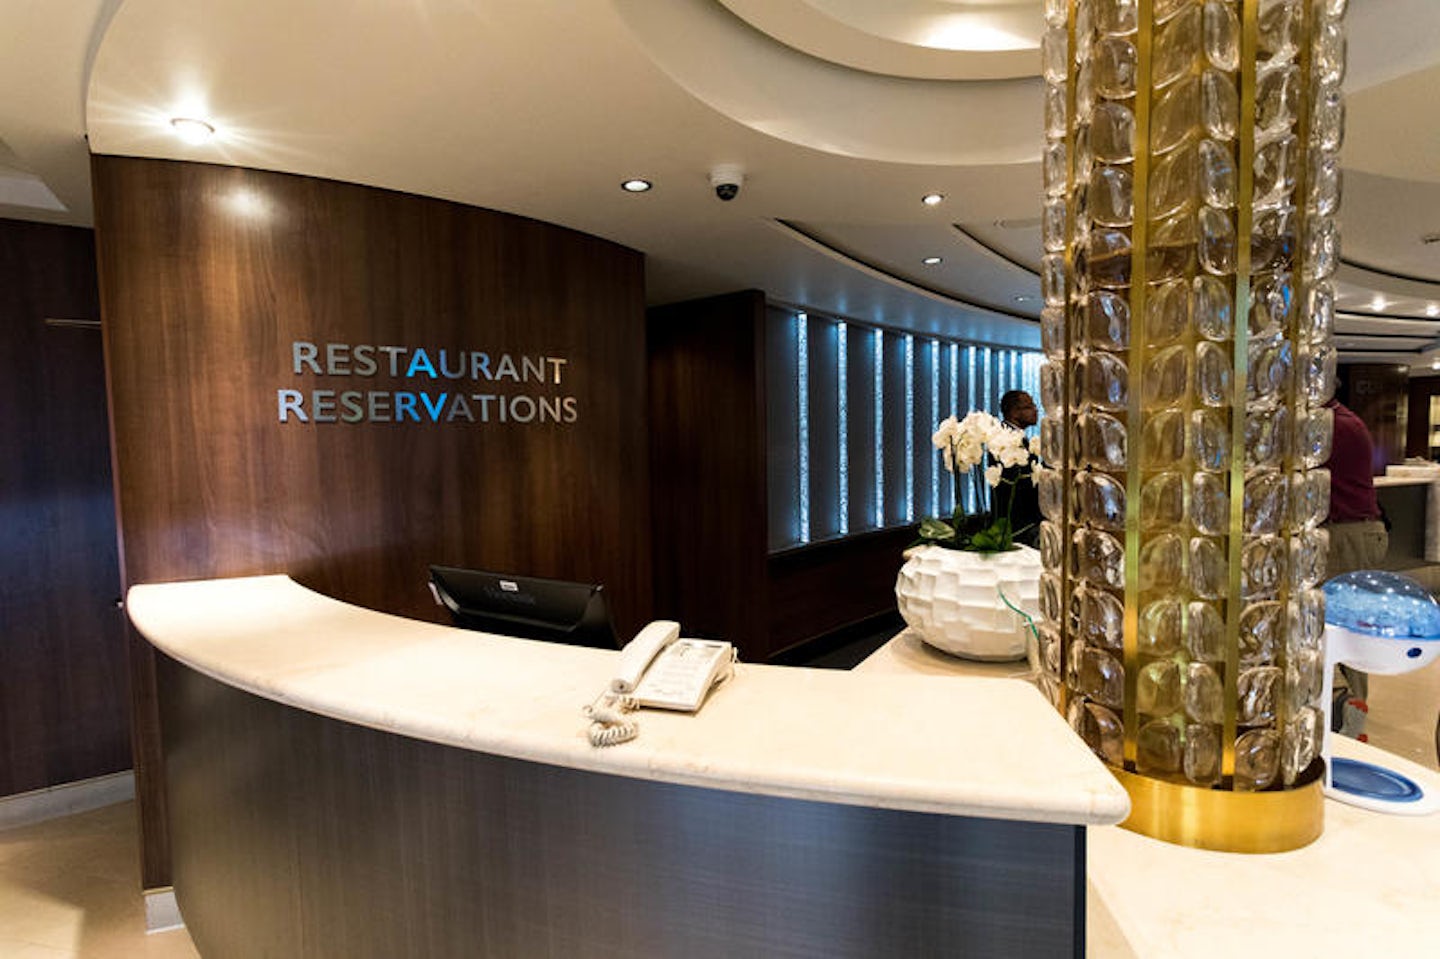 Restaurant Reservations Desk on Norwegian Jade